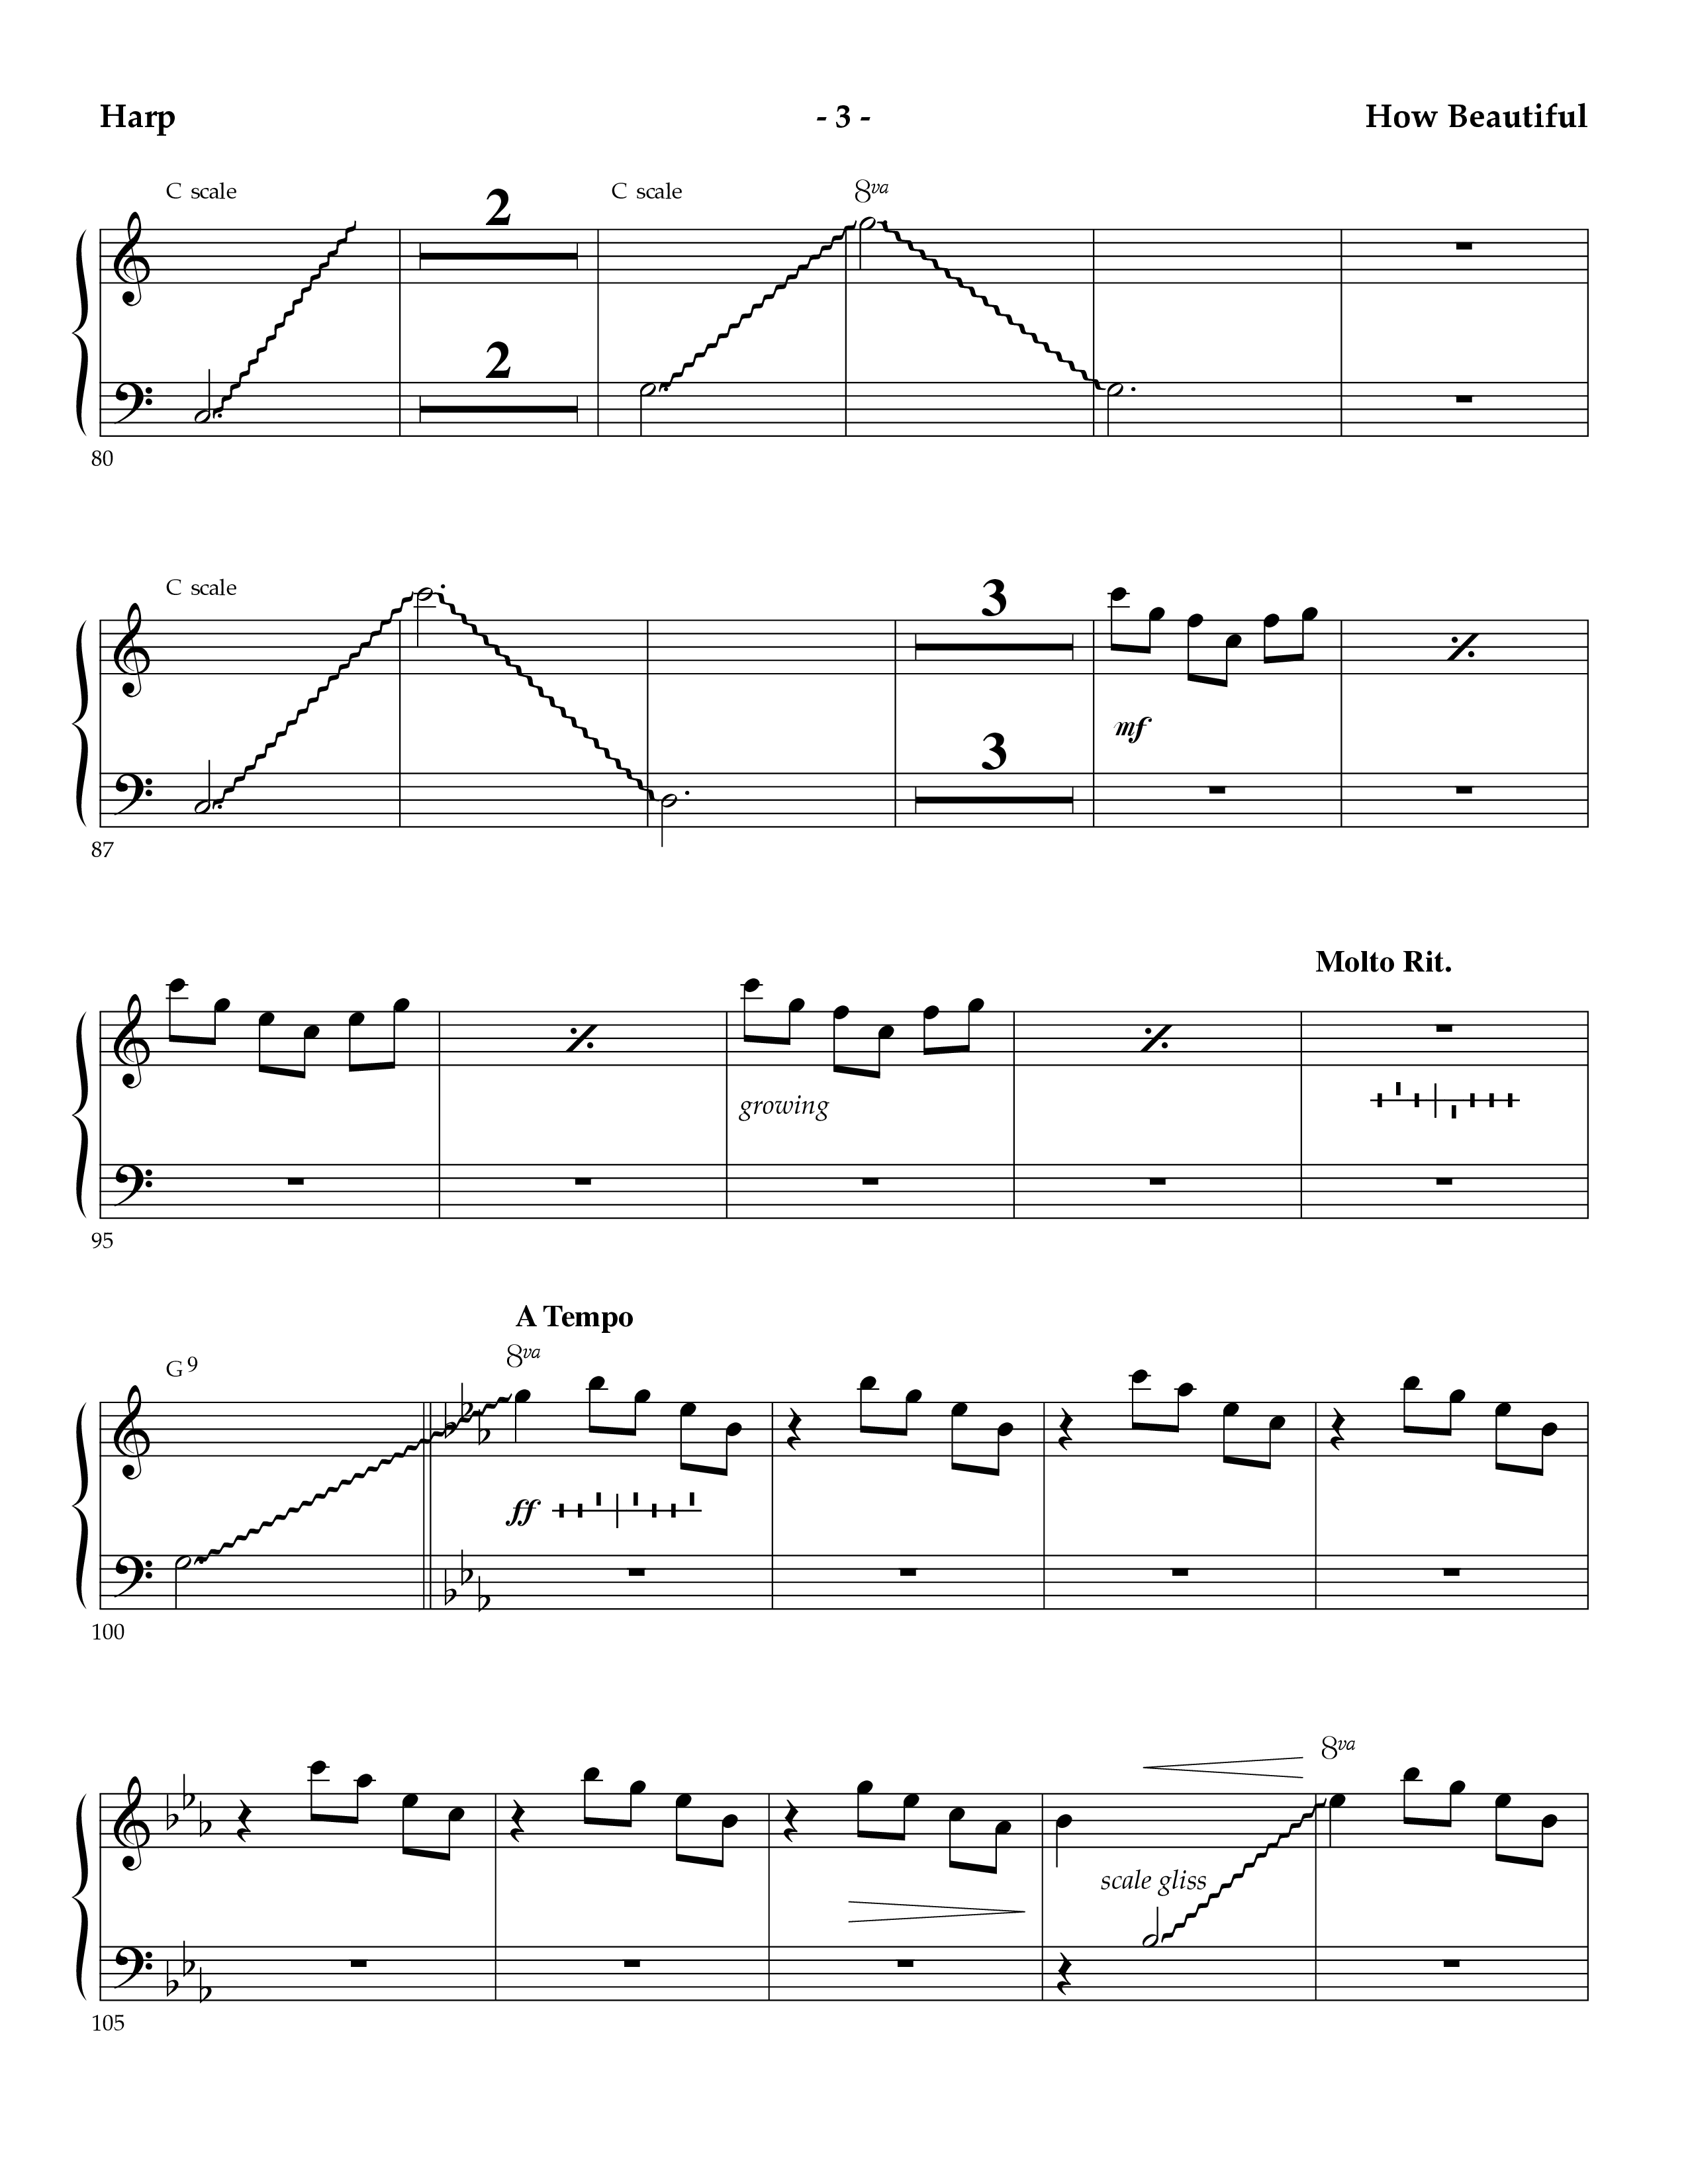 How Beautiful (Instrumental) Harp (Lifeway Worship / Arr. Mark Johnson)